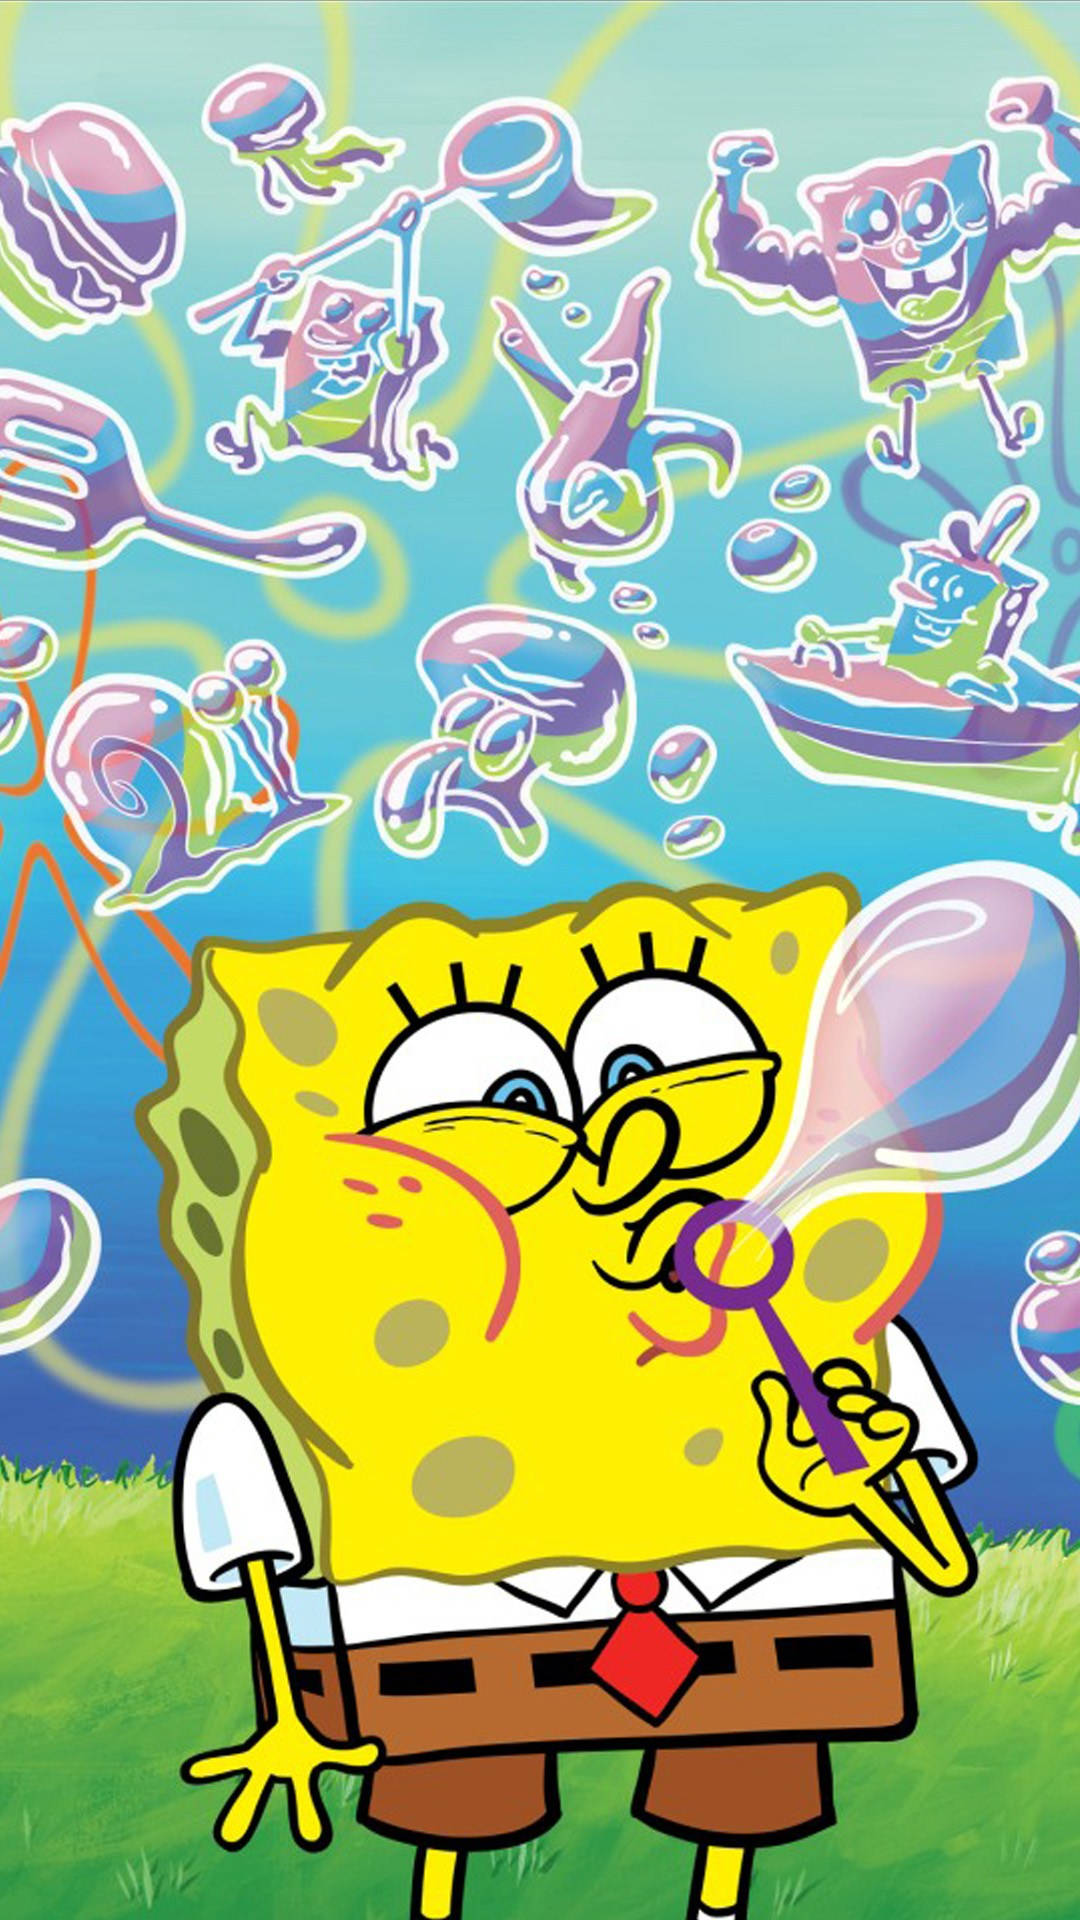 Spongebob 1080X1920 Wallpaper and Background Image